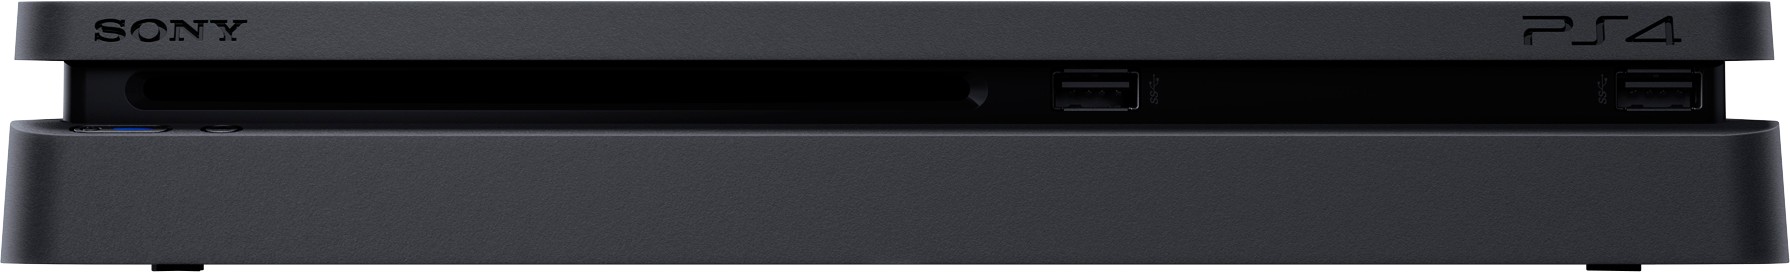 PlayStation 4 Slim (1TB, Jet Black) + 2 Controller